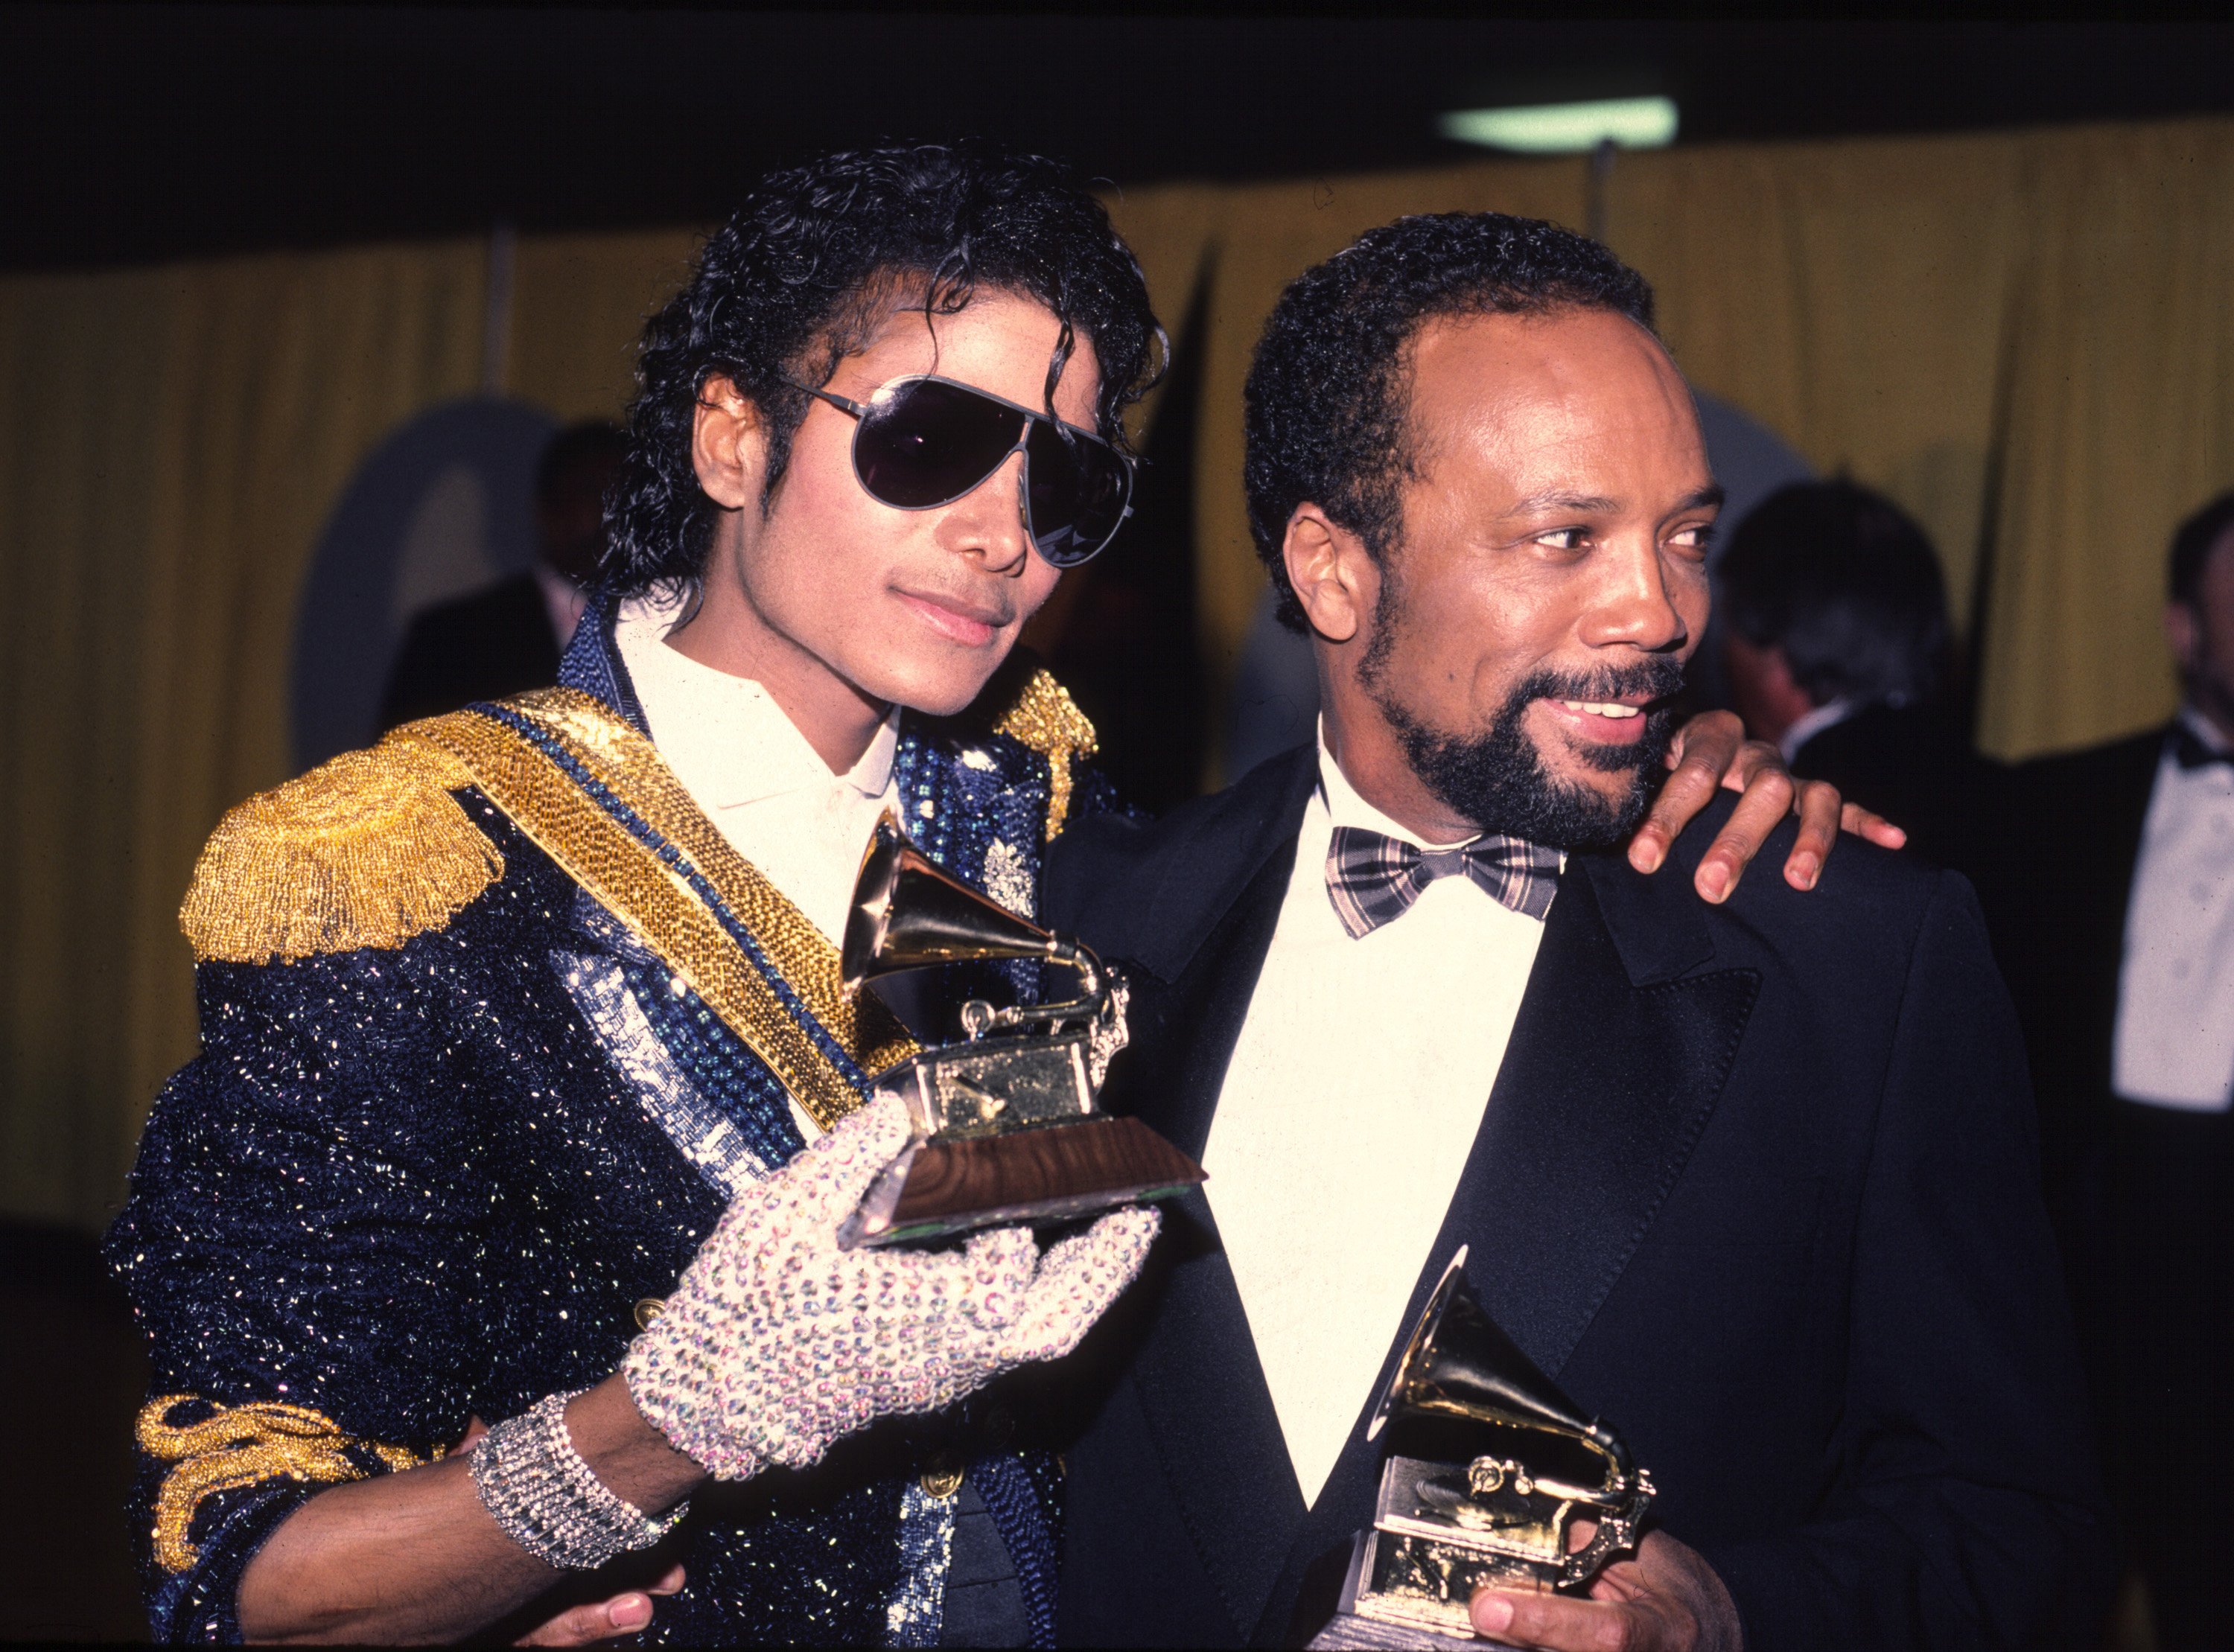 Michael Jackson putting his arm around Quincy Jones